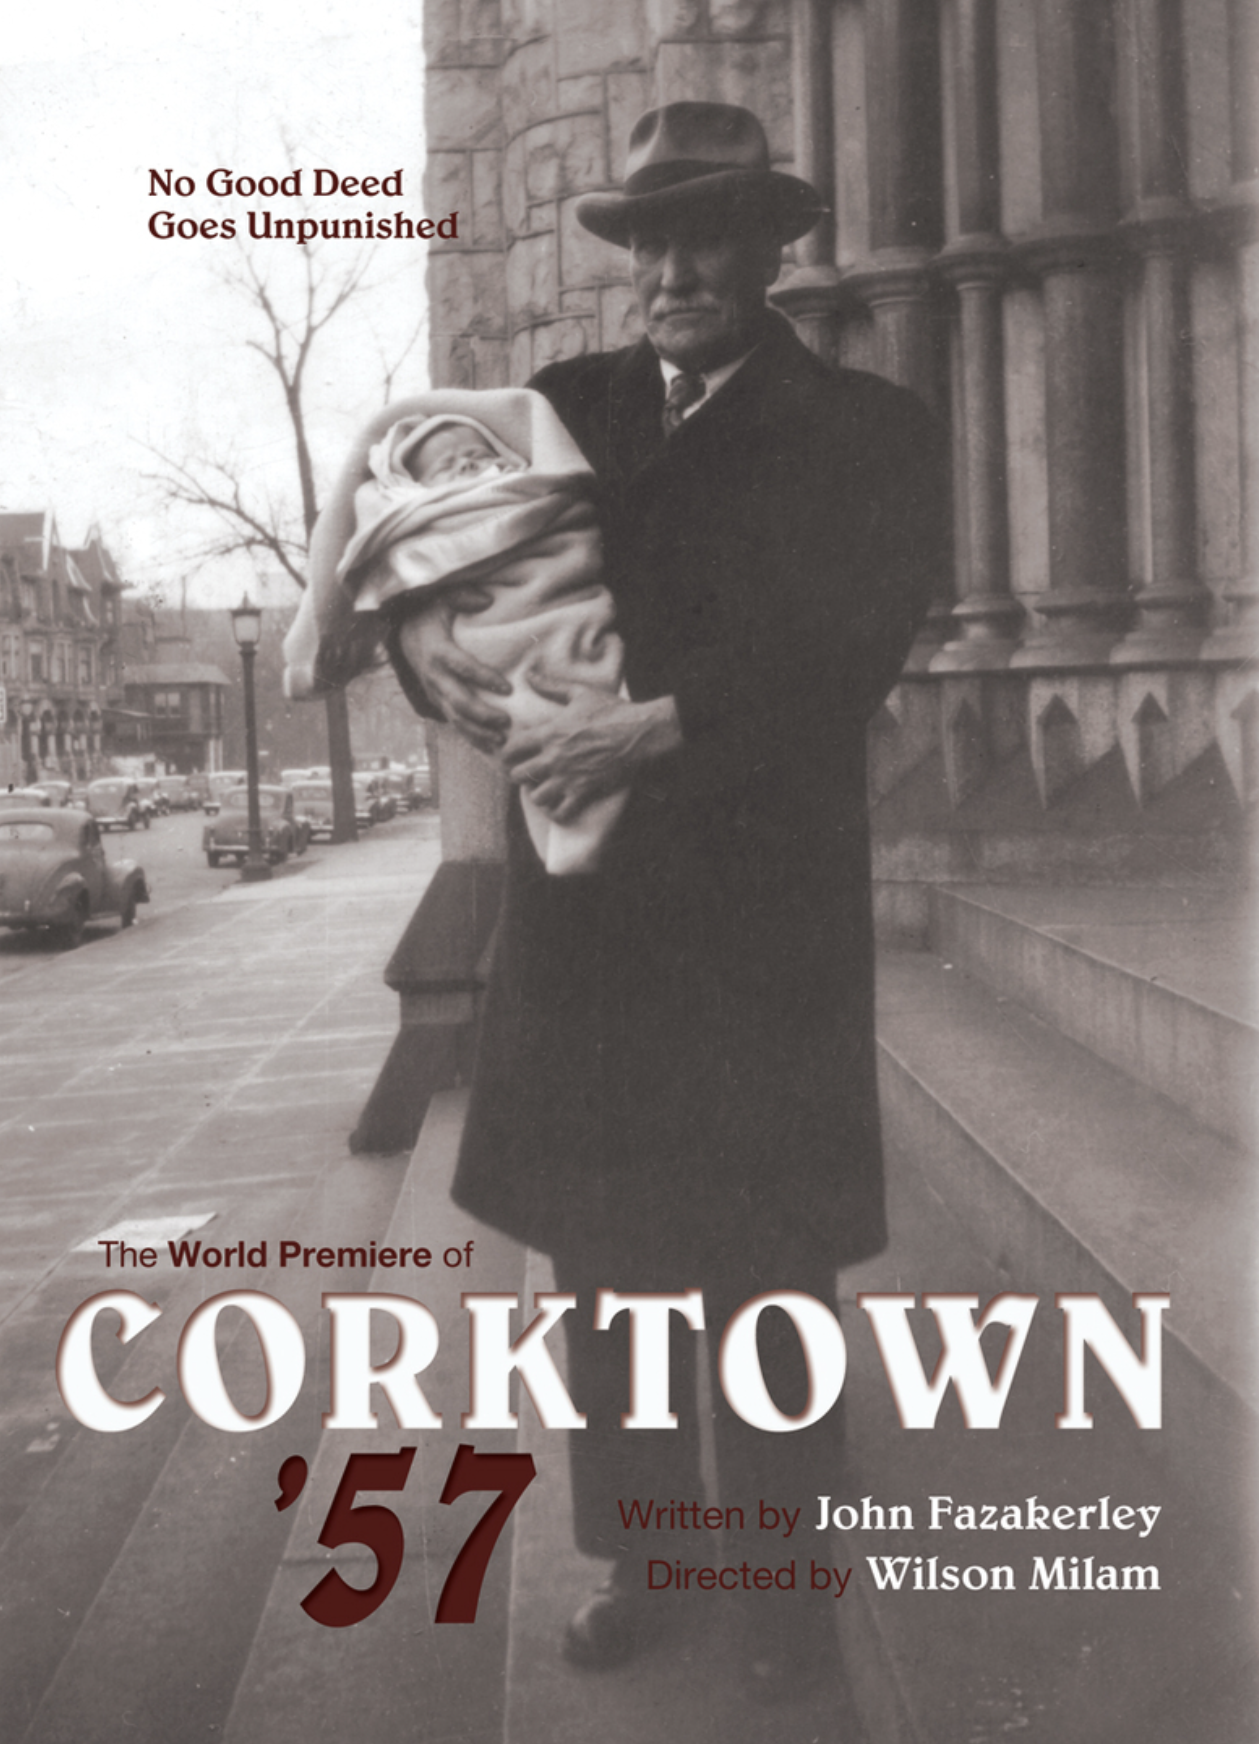 Corktown.png